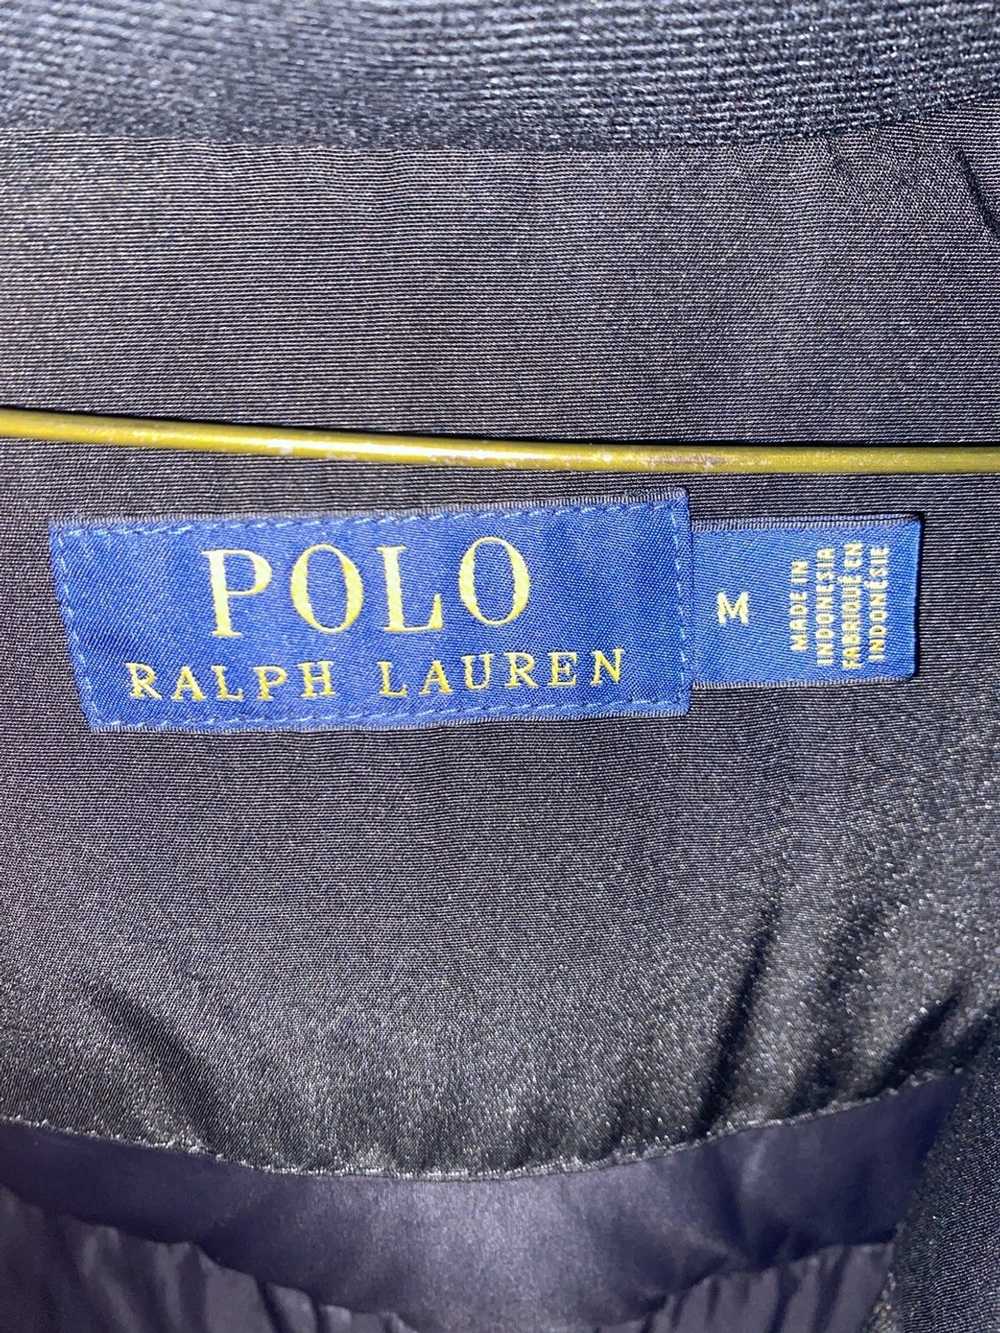 Polo Ralph Lauren Polo Ralph Lauren Parka - image 3